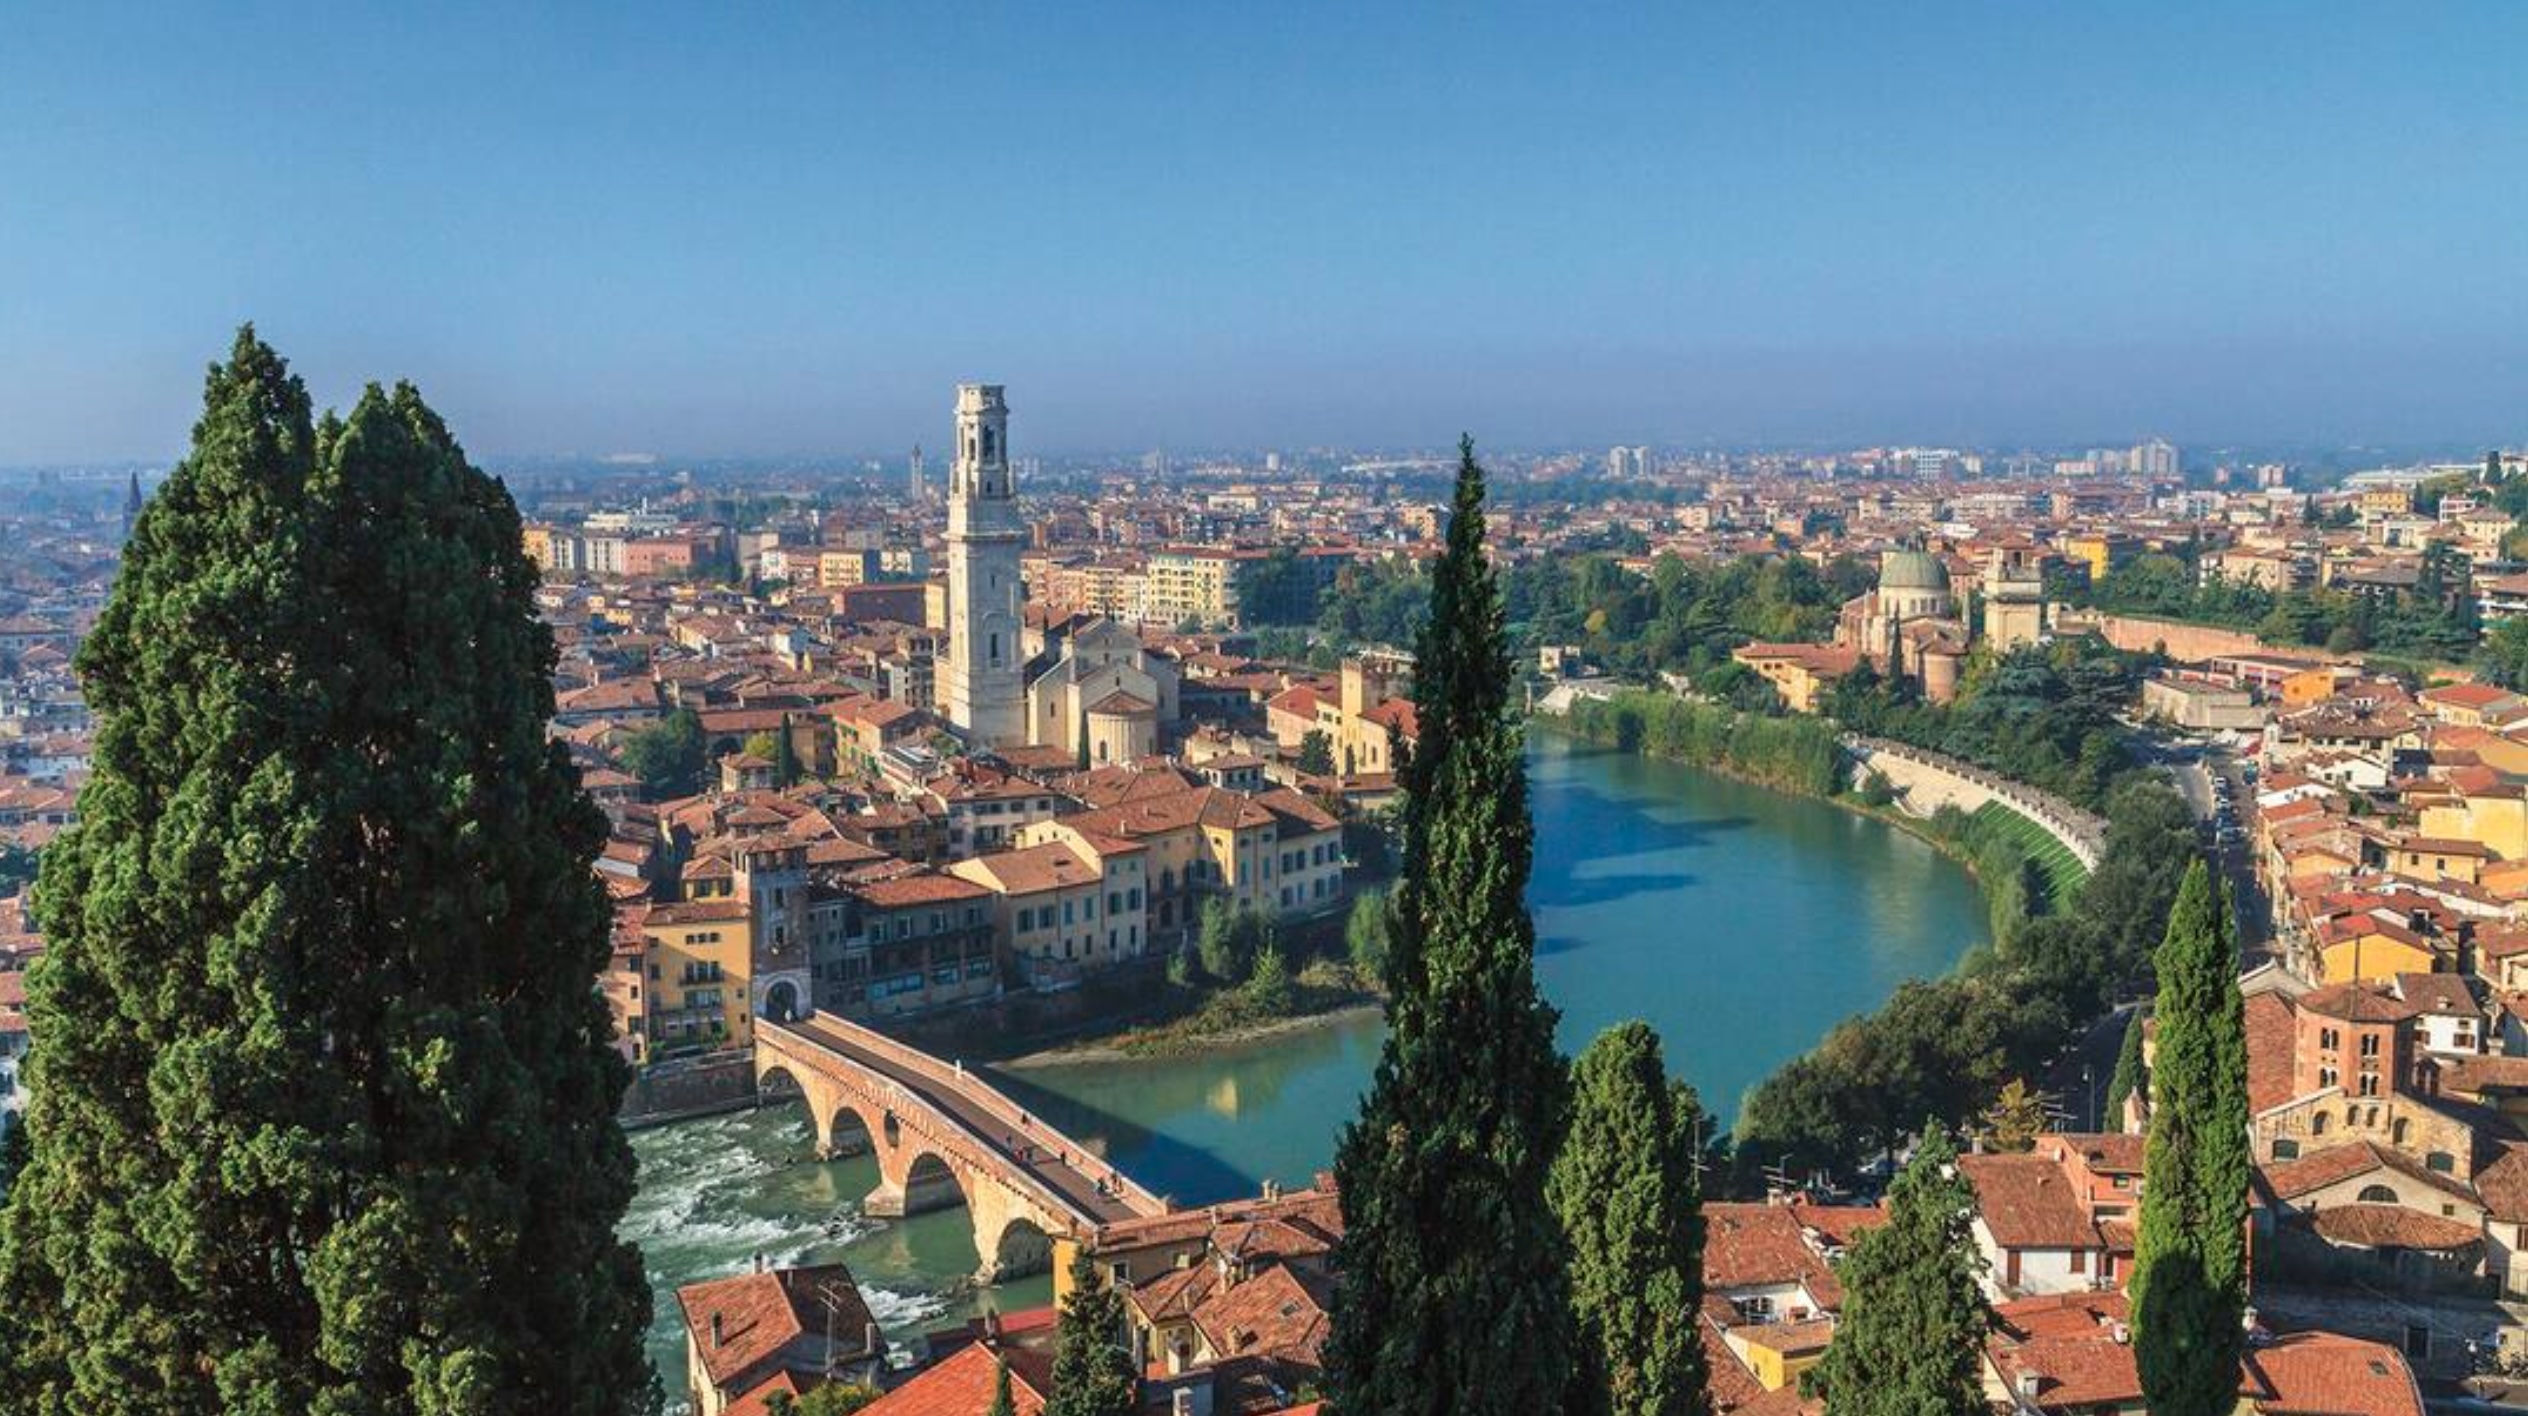 Overhead view of Verona city